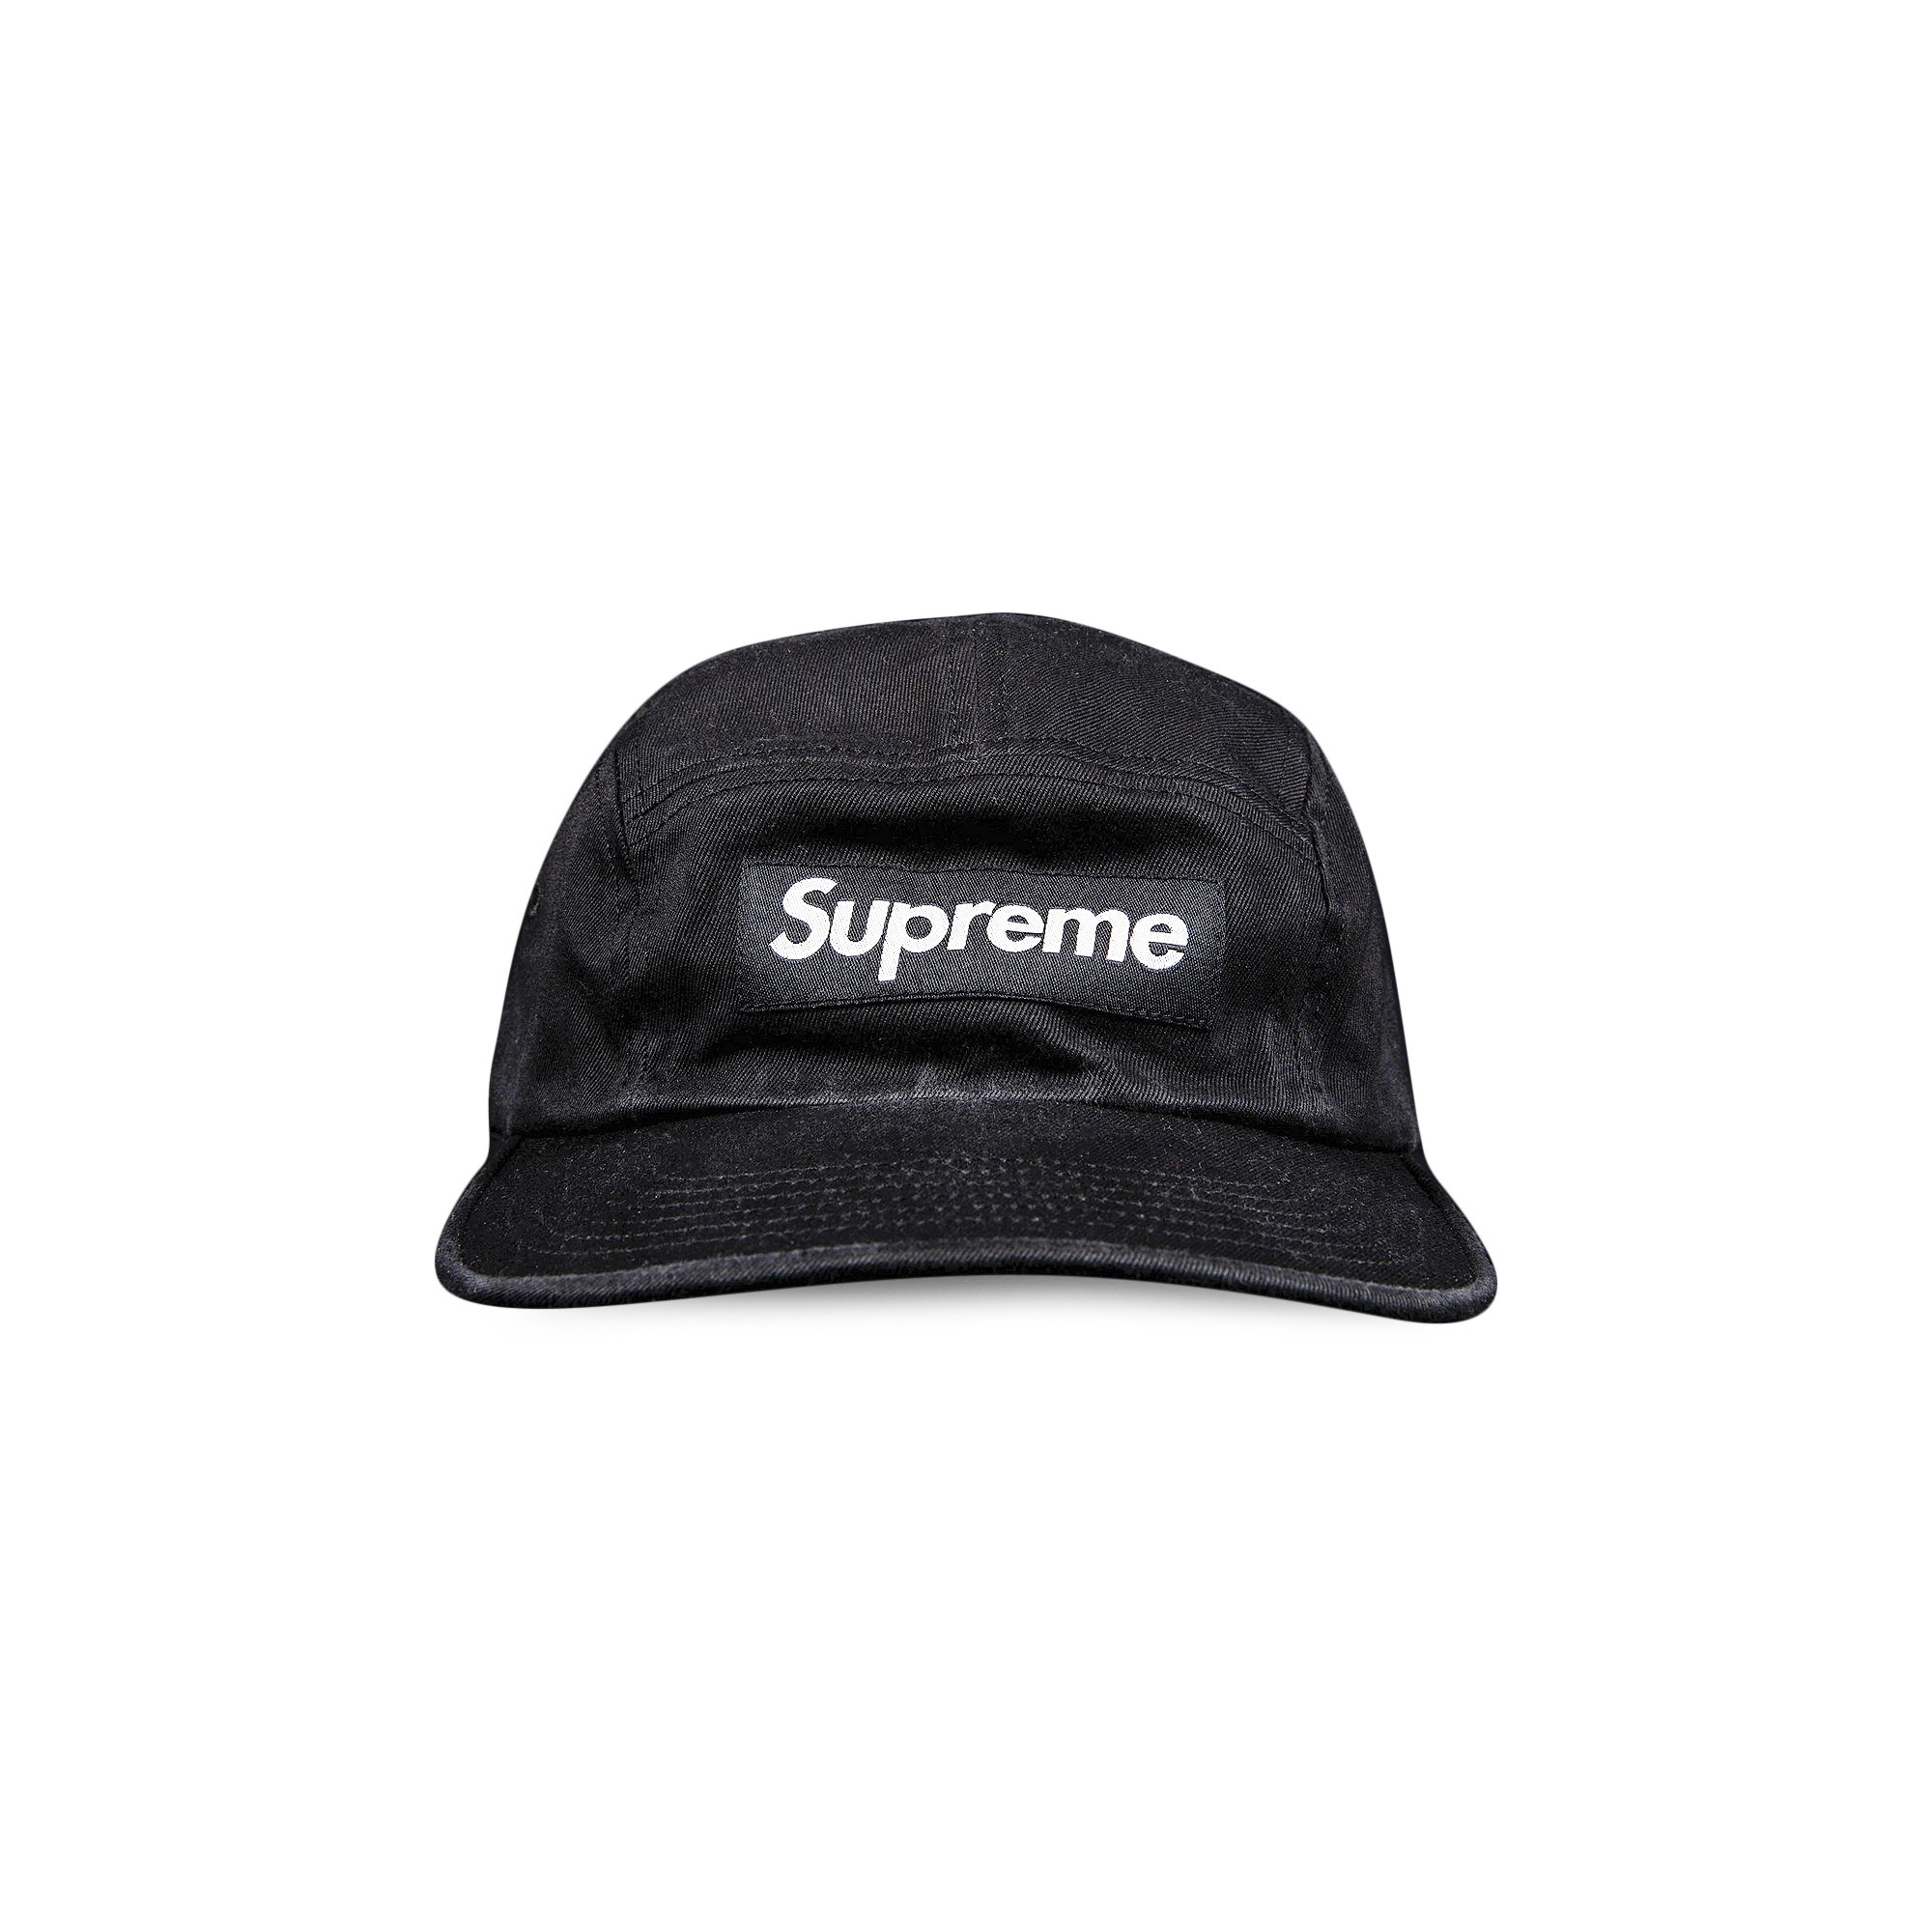 Supreme - Washed Chino Twill Camp Cap キャップ 帽子 メンズ 売り出しお値下